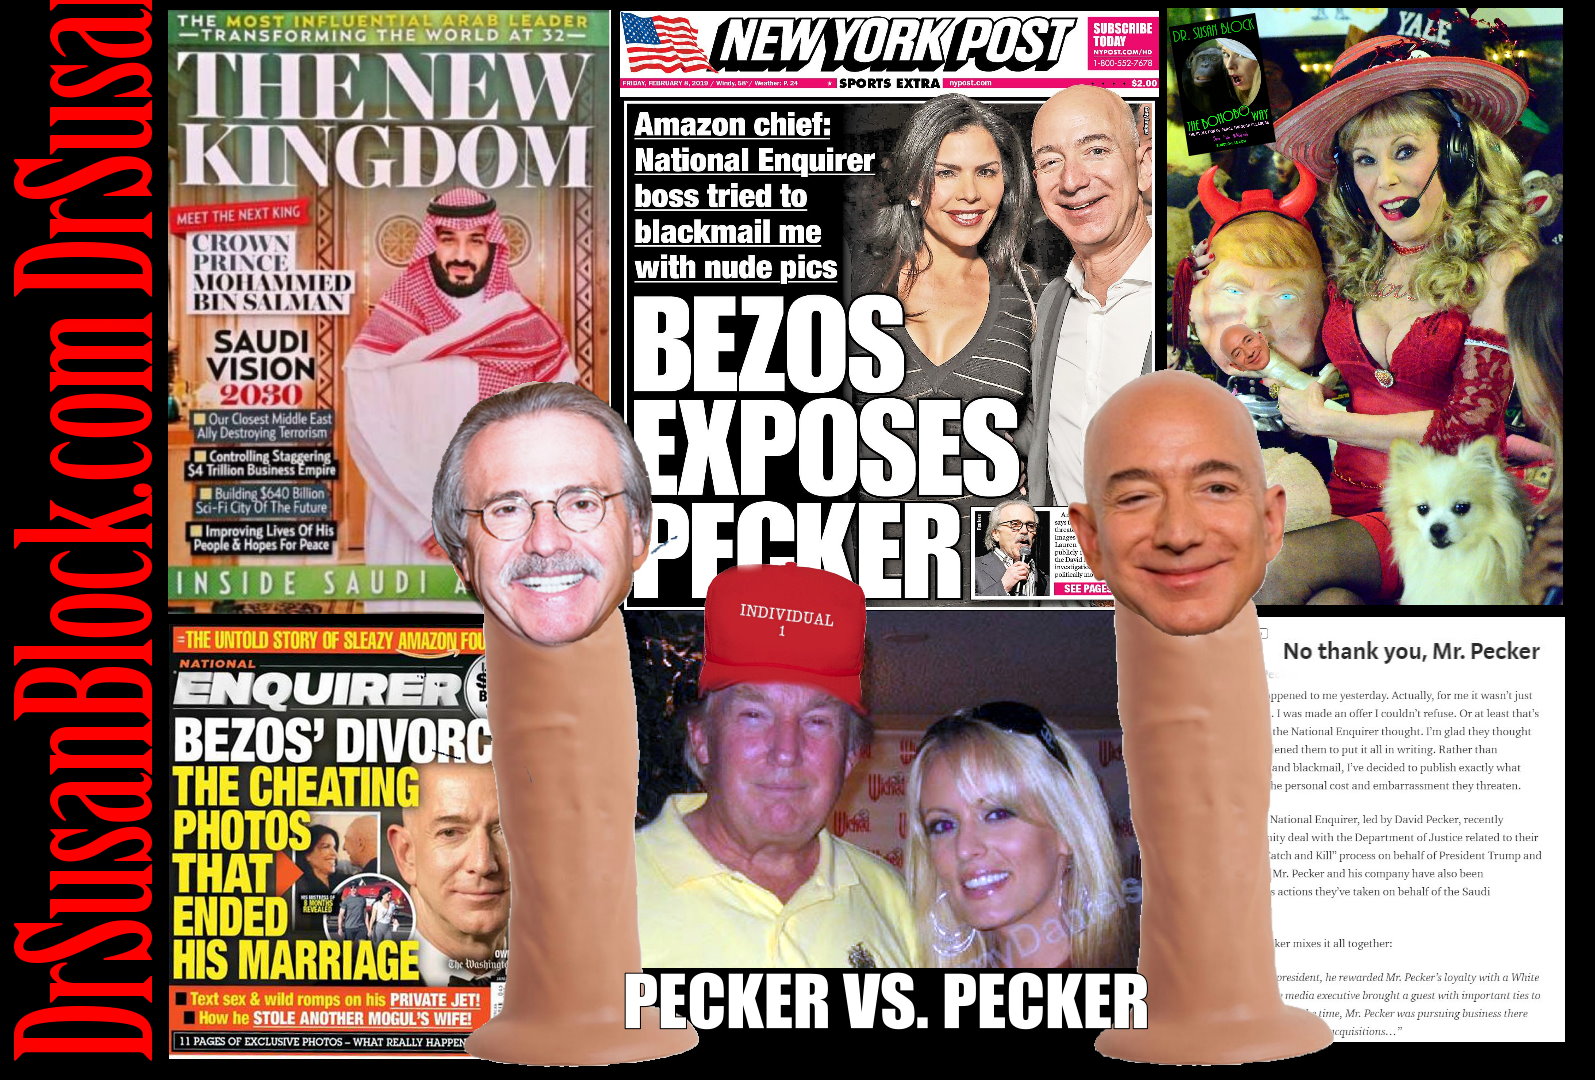 Why Bezos Exposed Trump’s Pecker